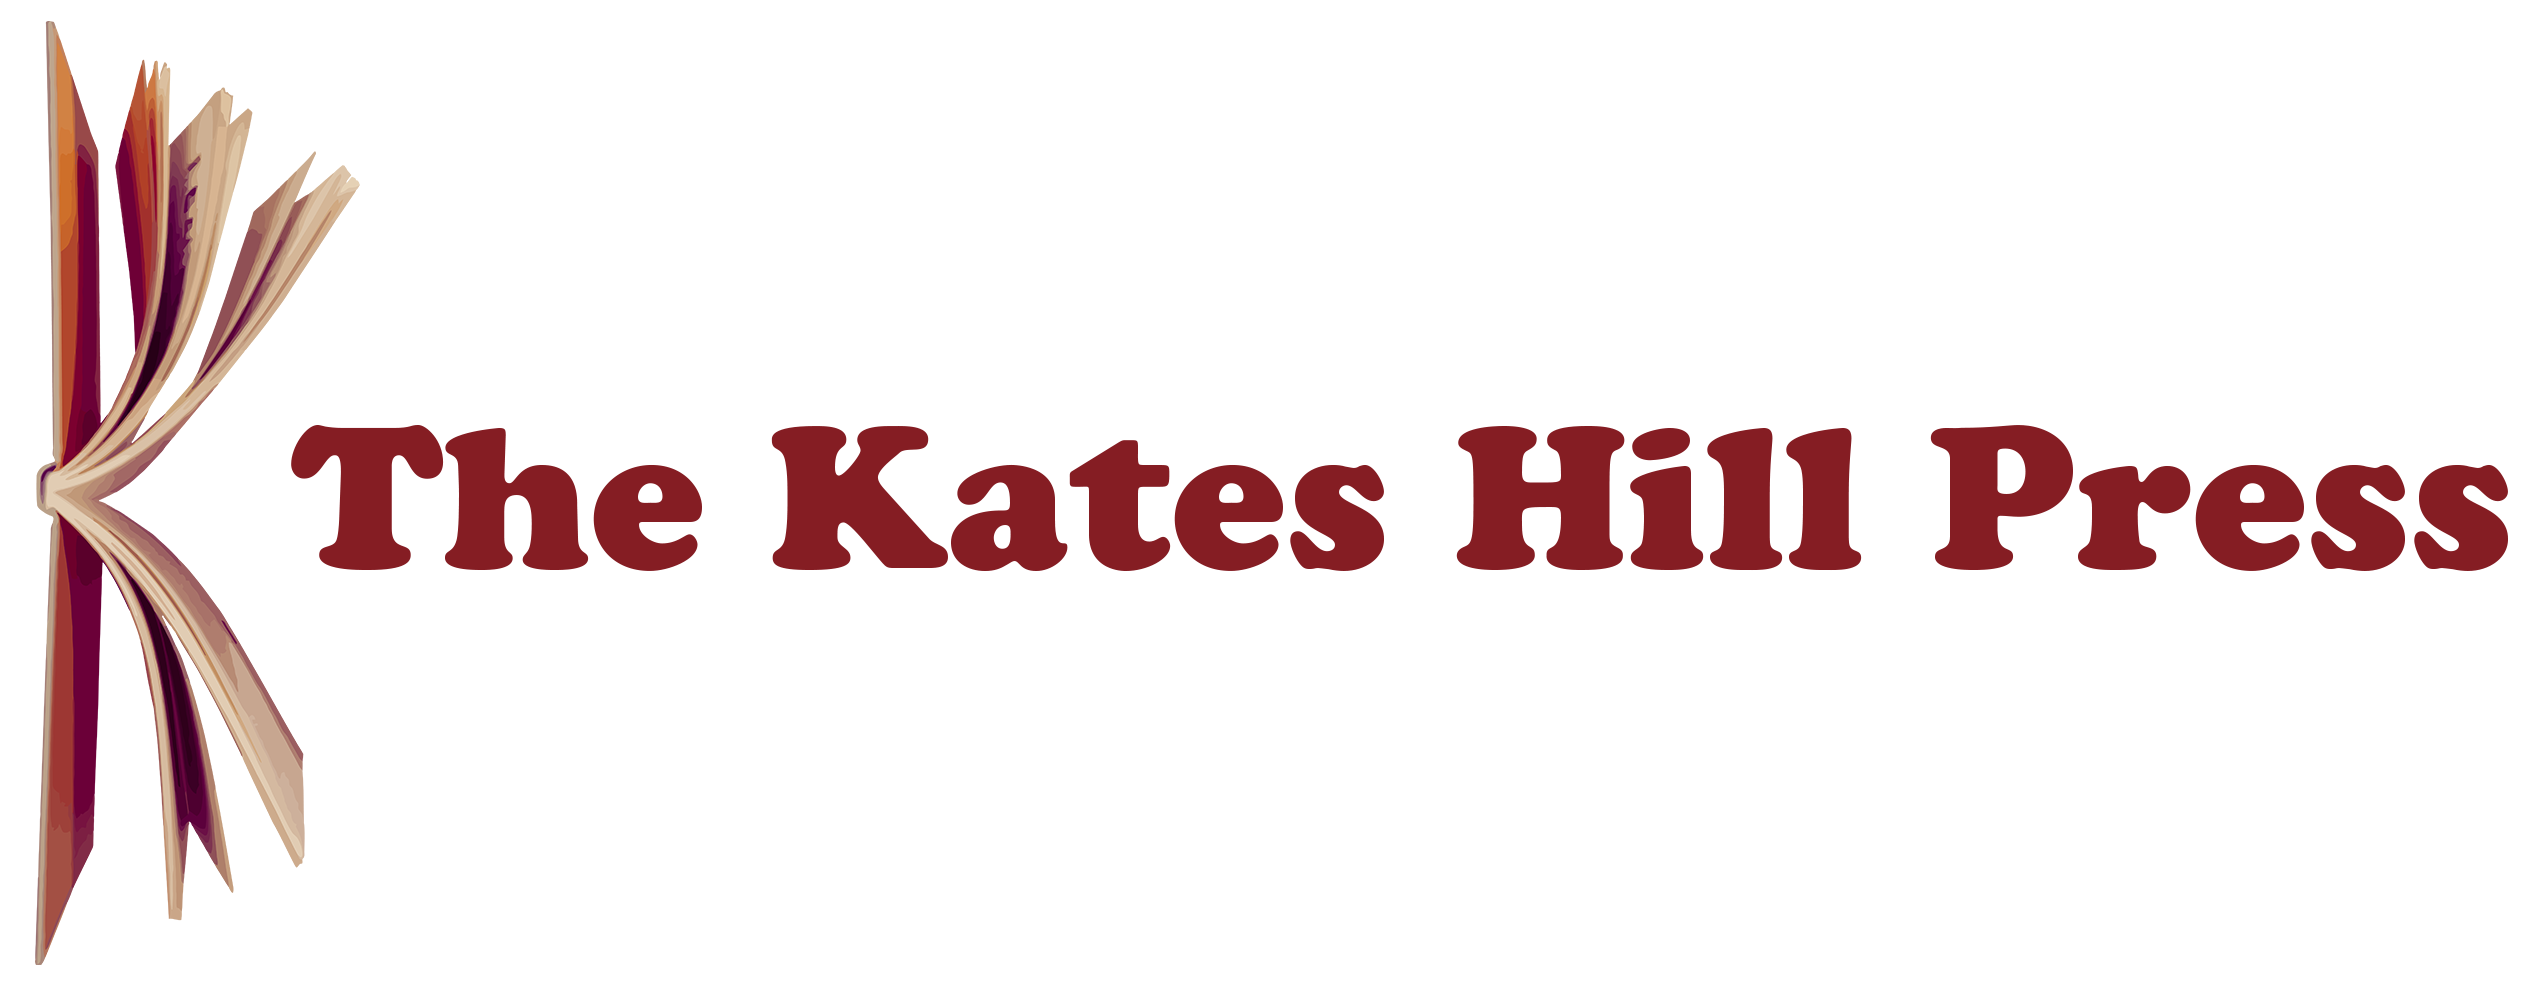 The Kates Hill Press